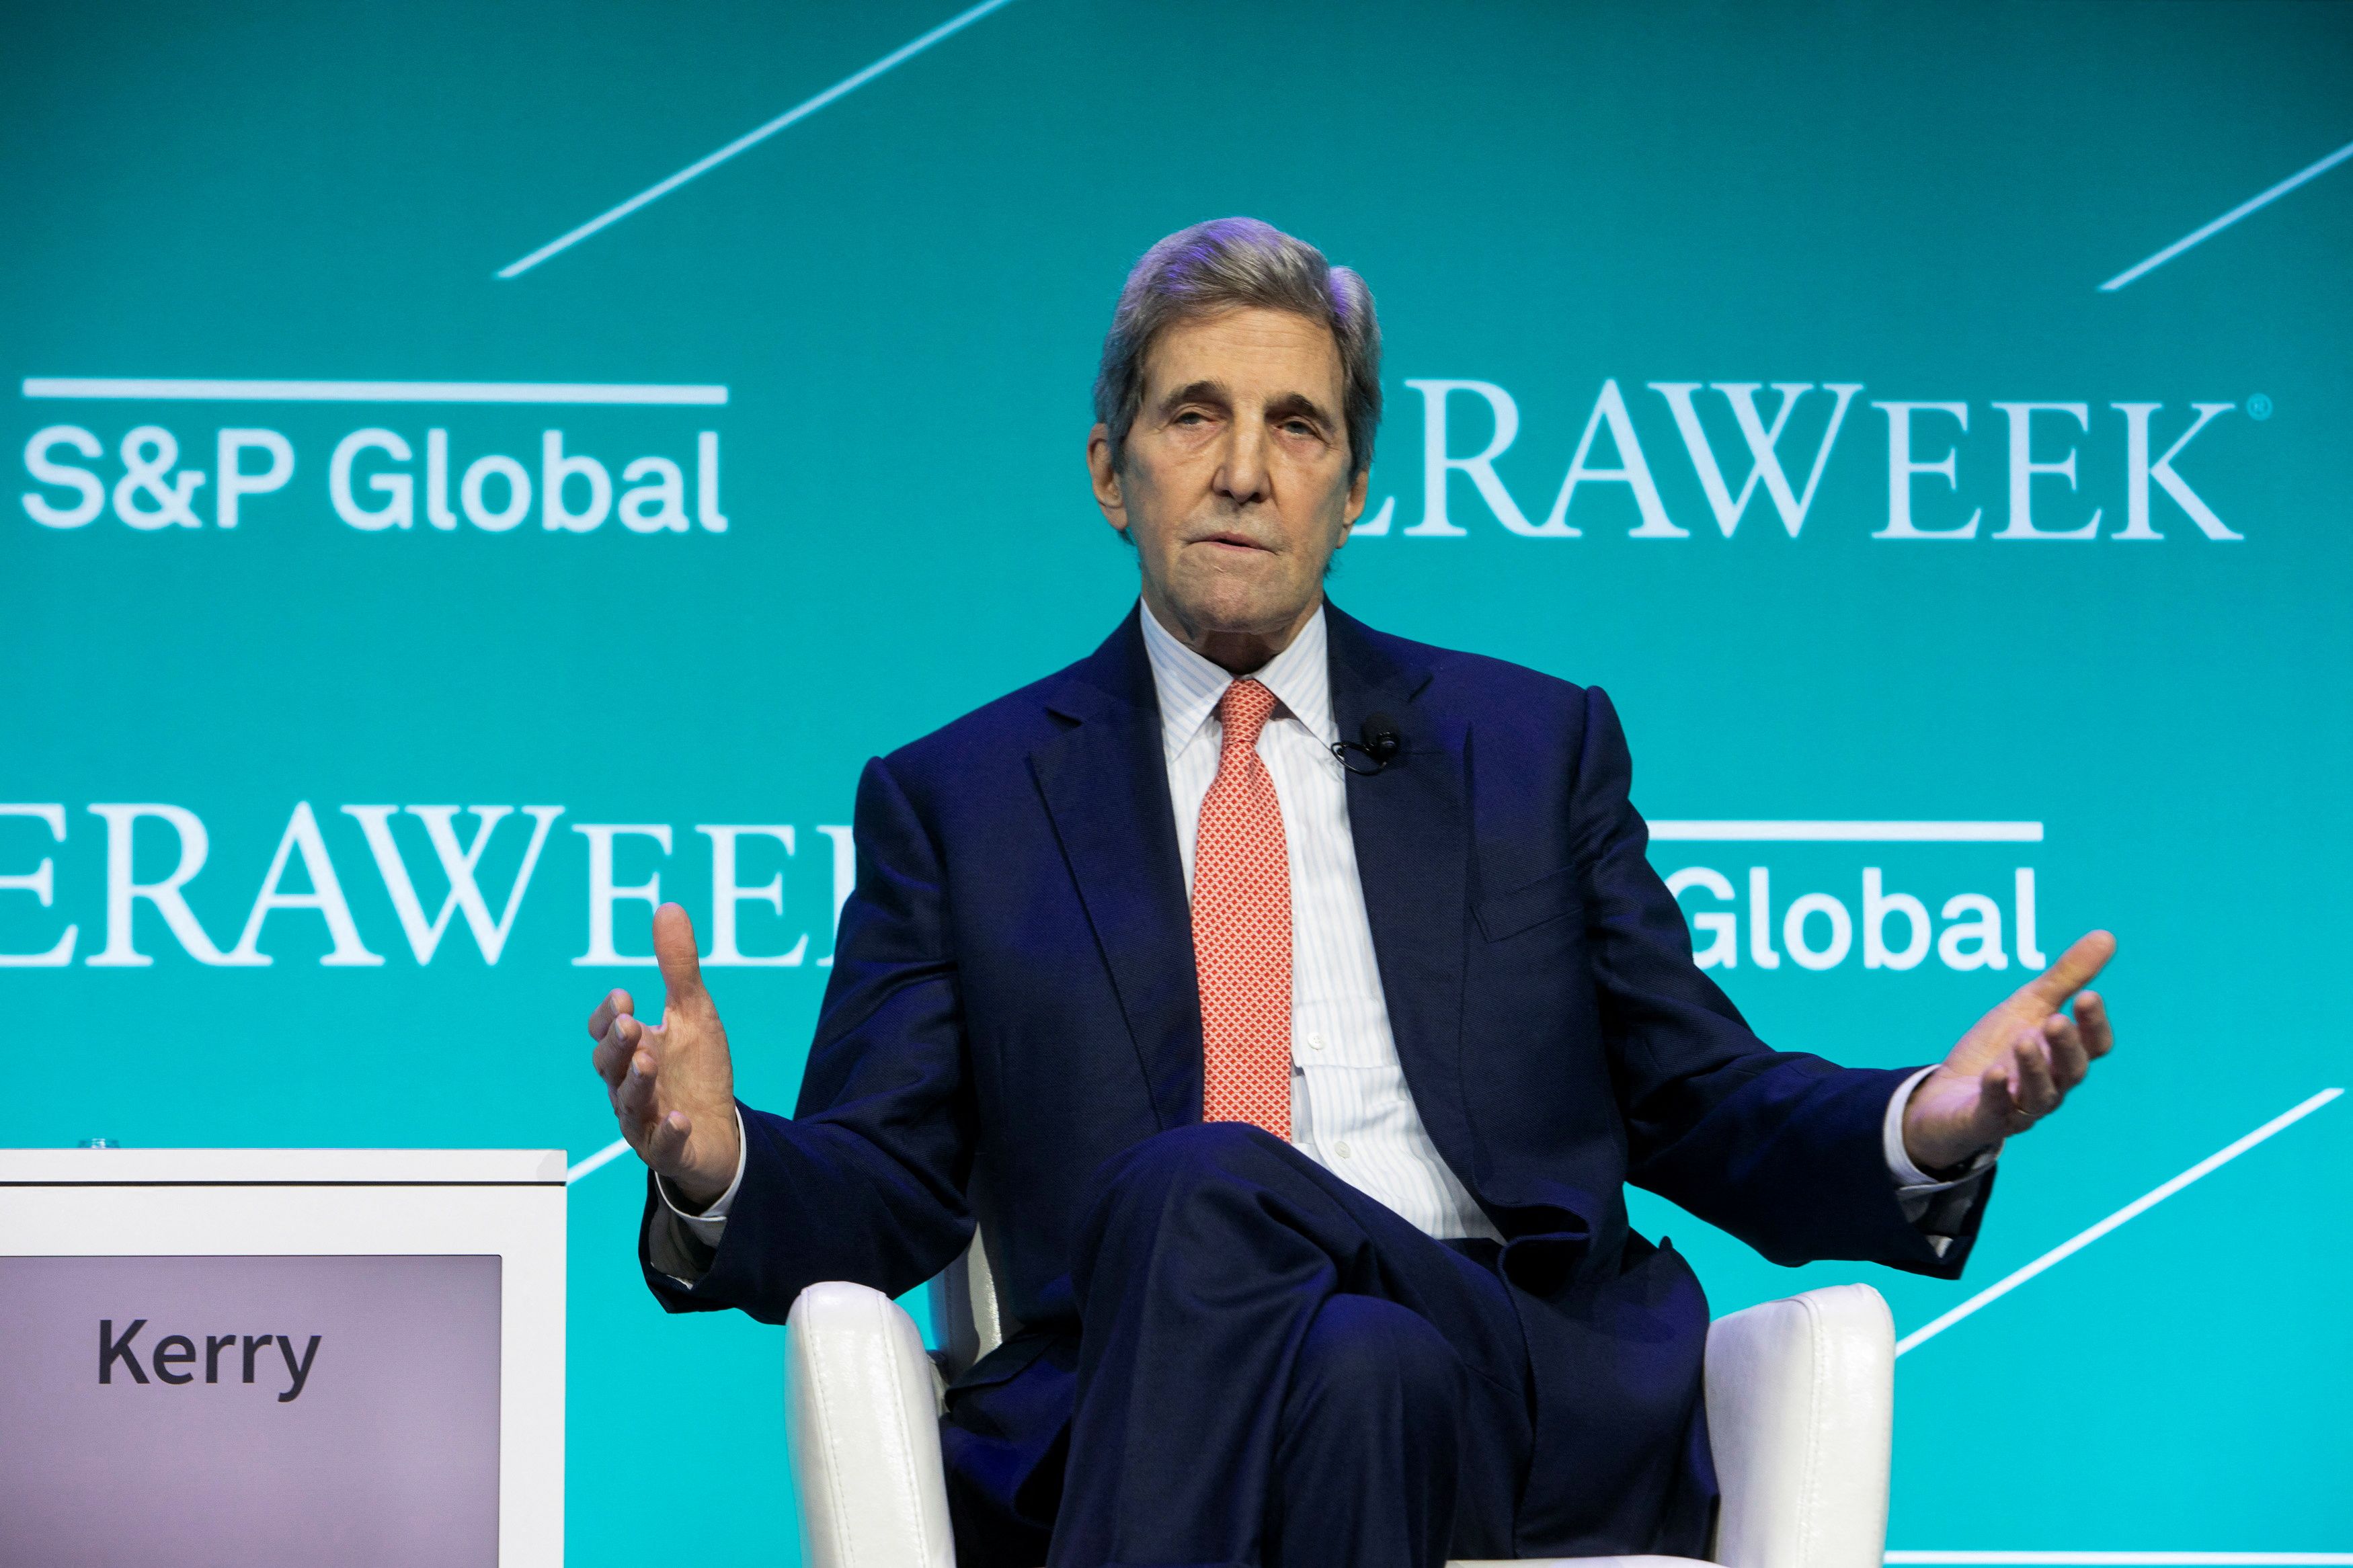 John Kerry viajó a México para discutir reforma eléctrica

REUTERS/Daniel Kramer